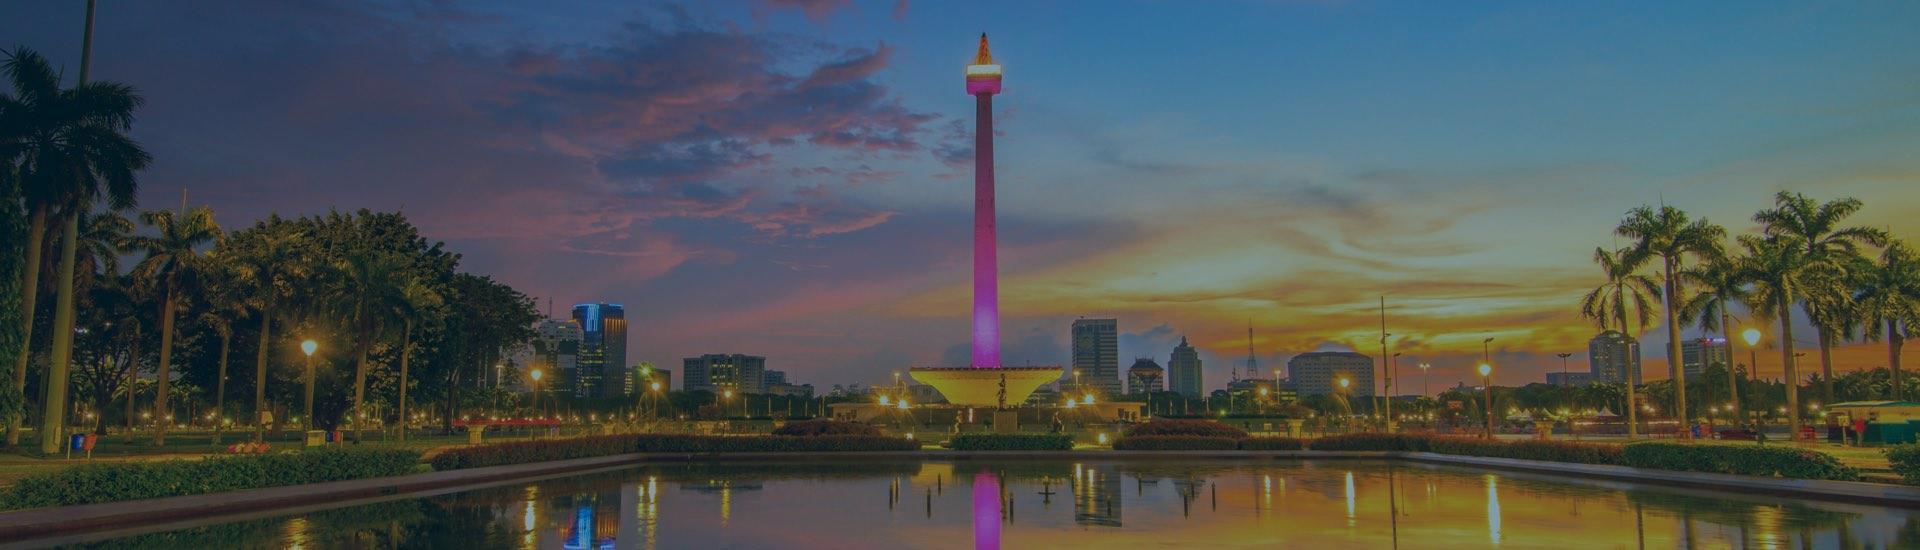 Find the Best Hotels in Jakarta